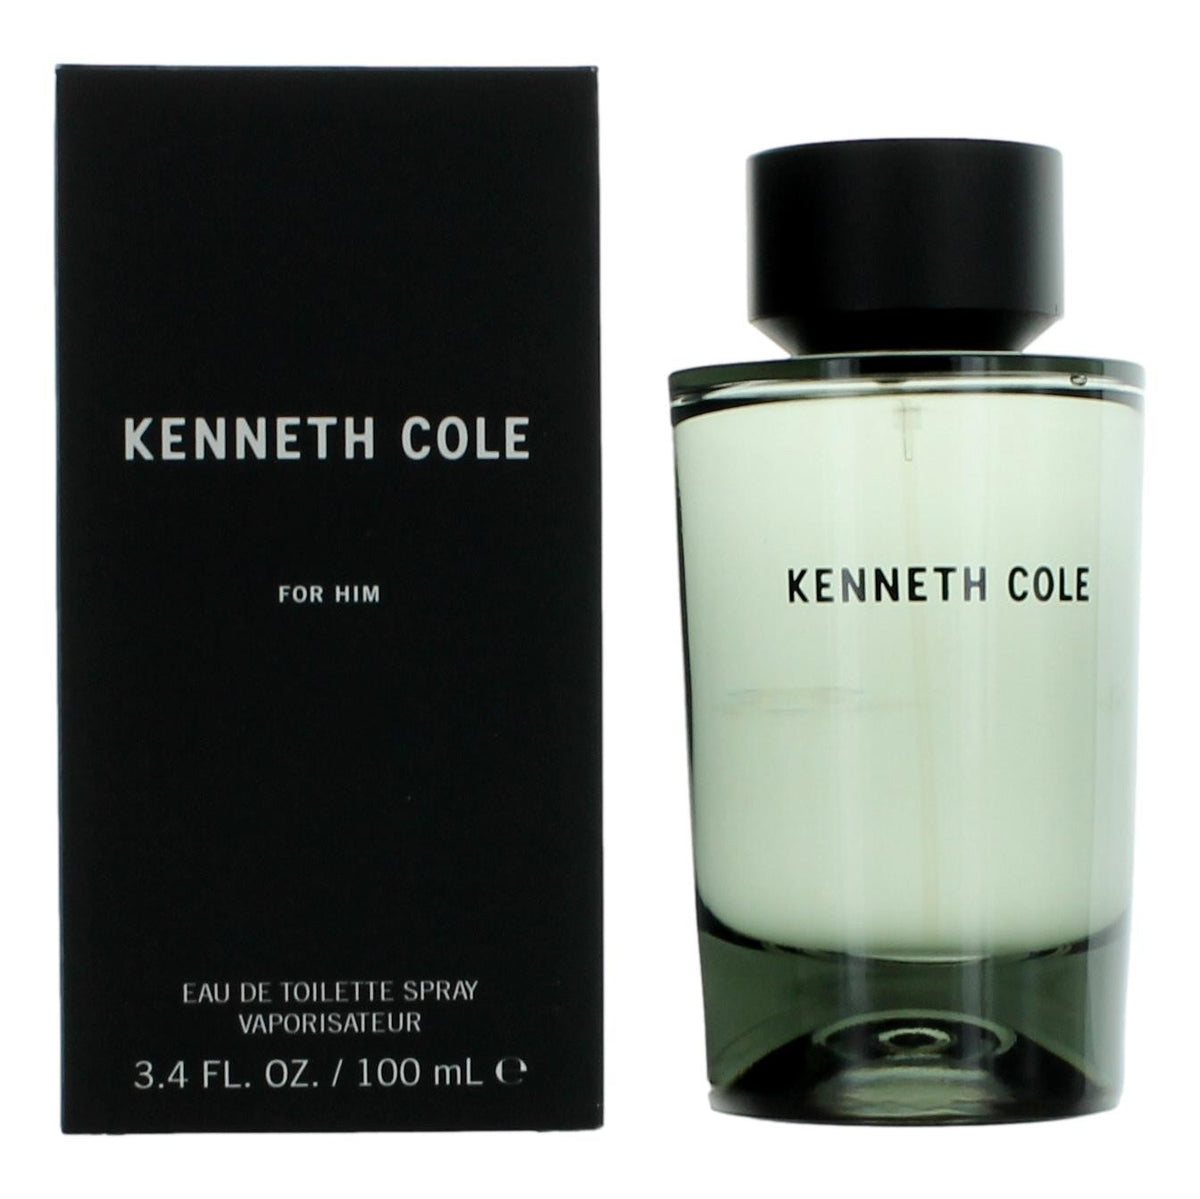 Kenneth Cole For Him by Kenneth Cole, 3.4 oz Eau De Toilette Spray for Men